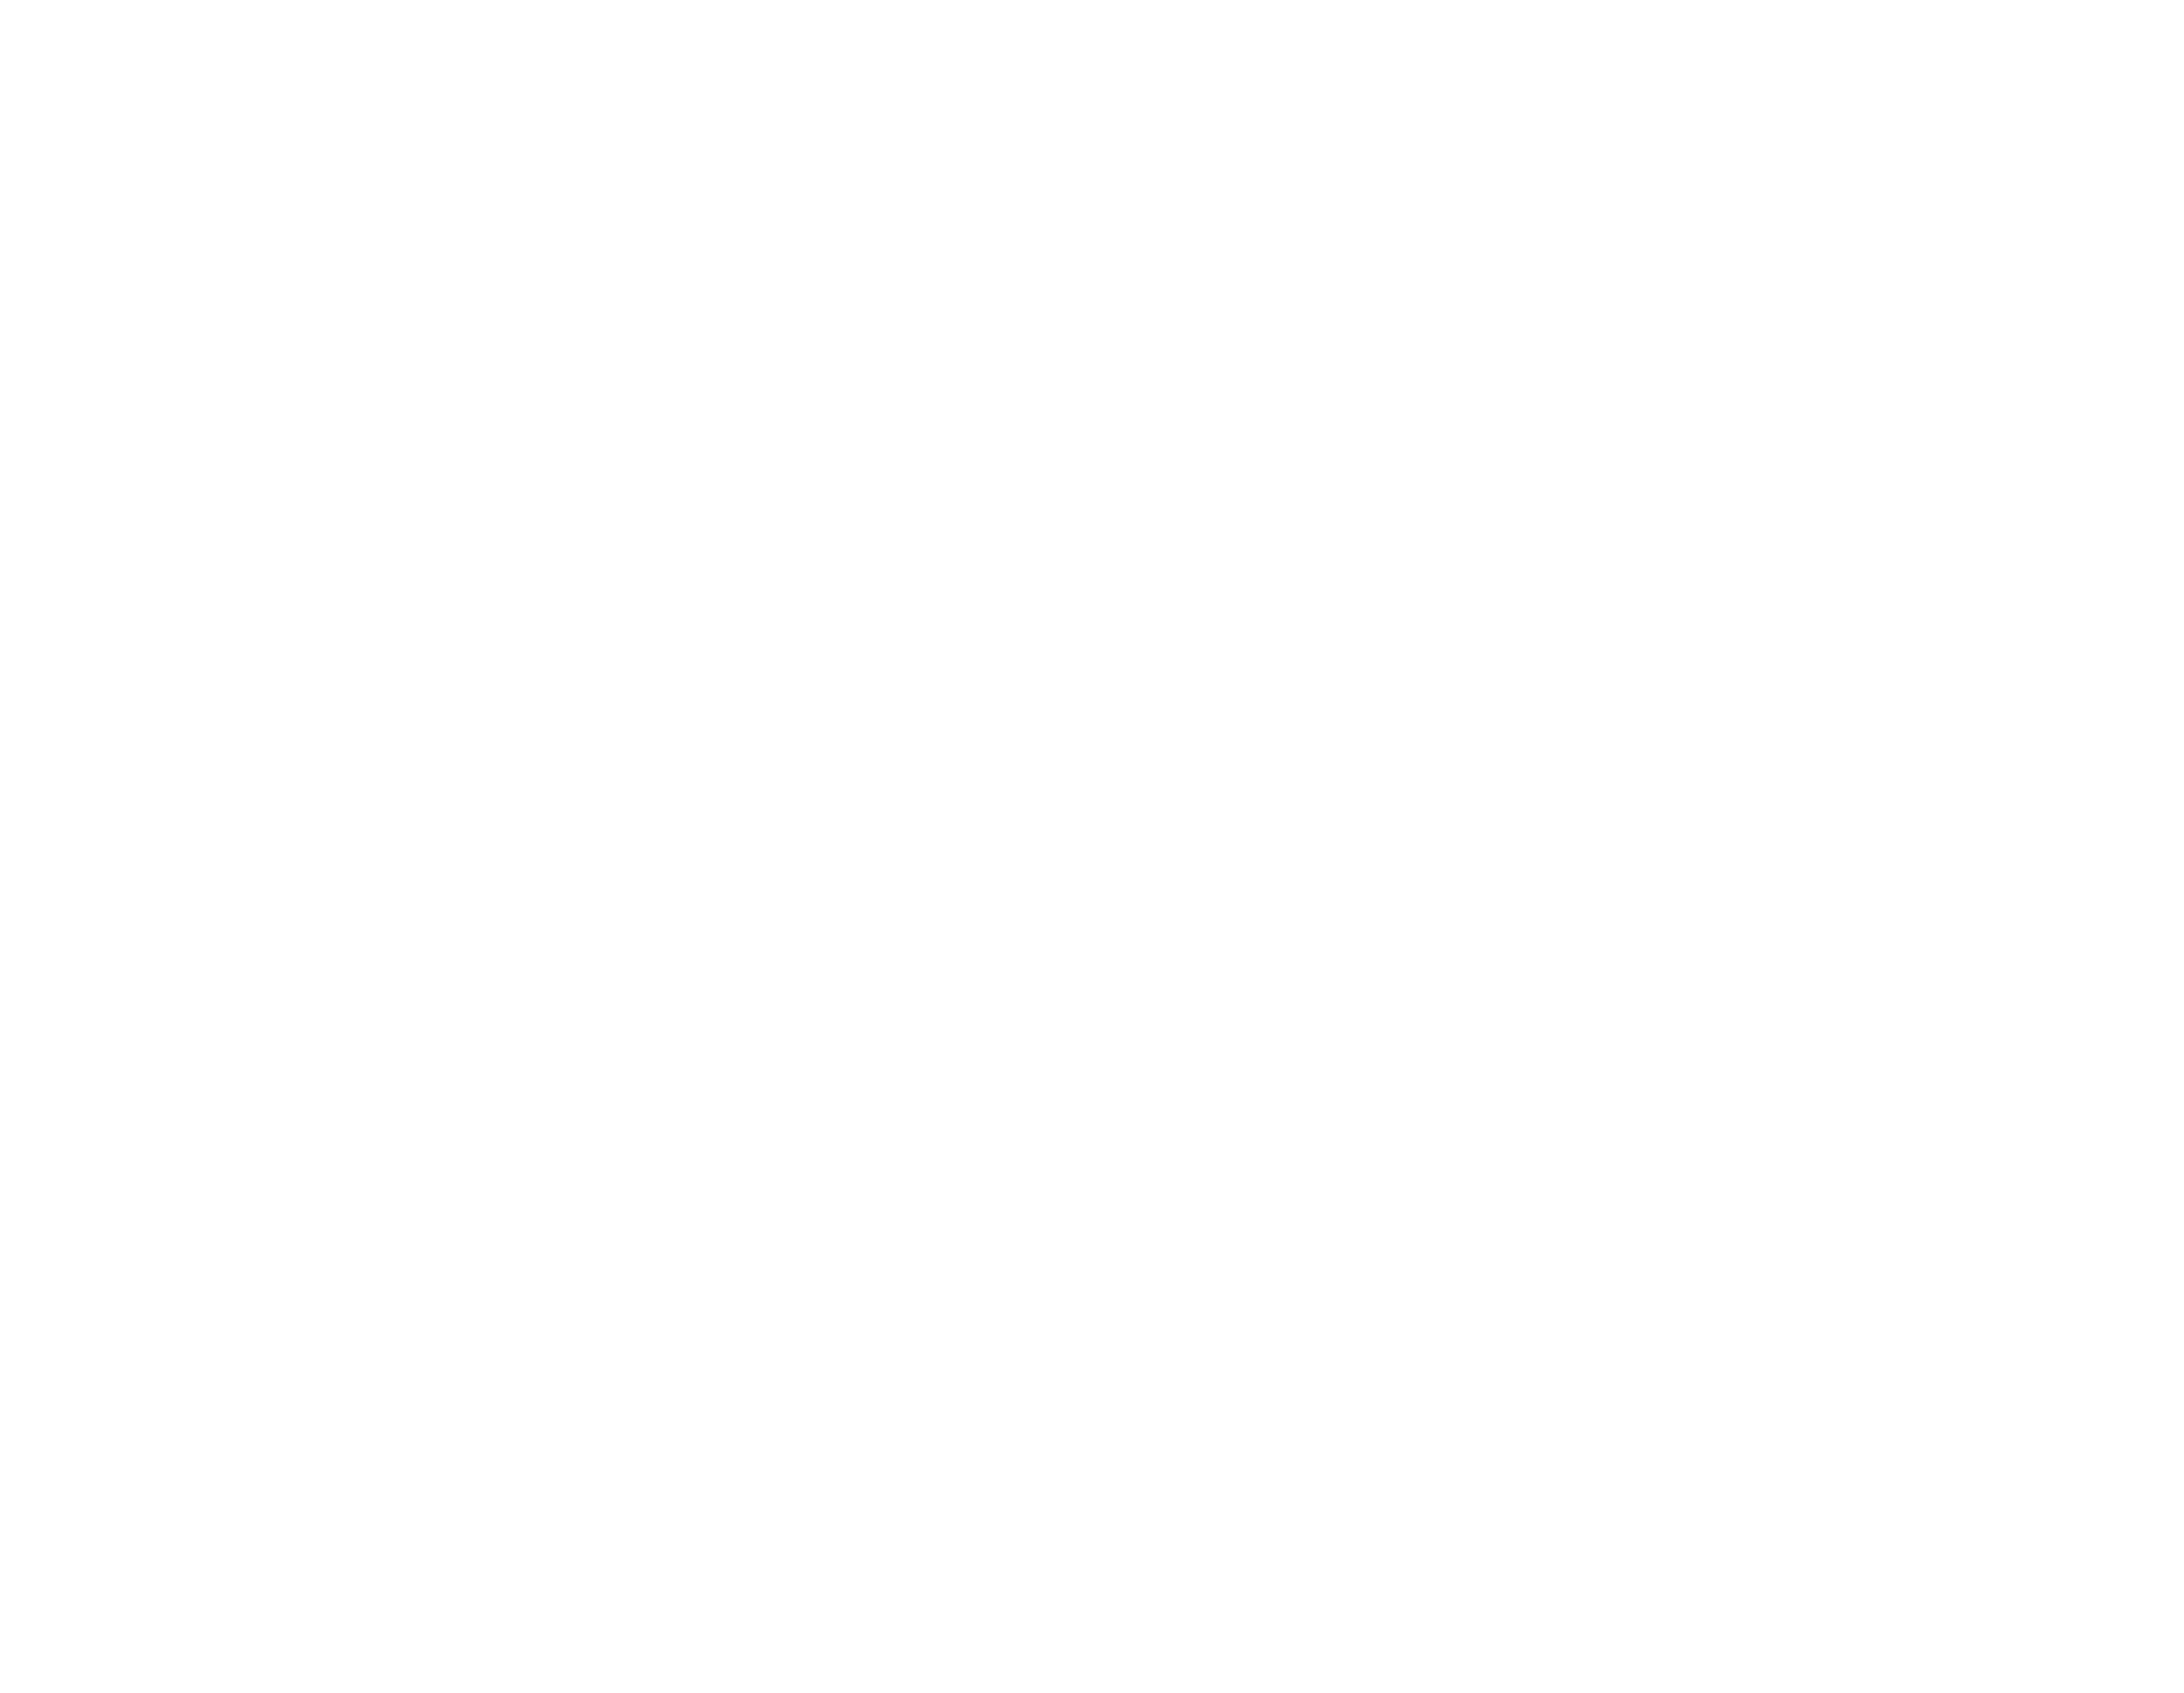 ICANN74 | Policy Forum The Hague Logo